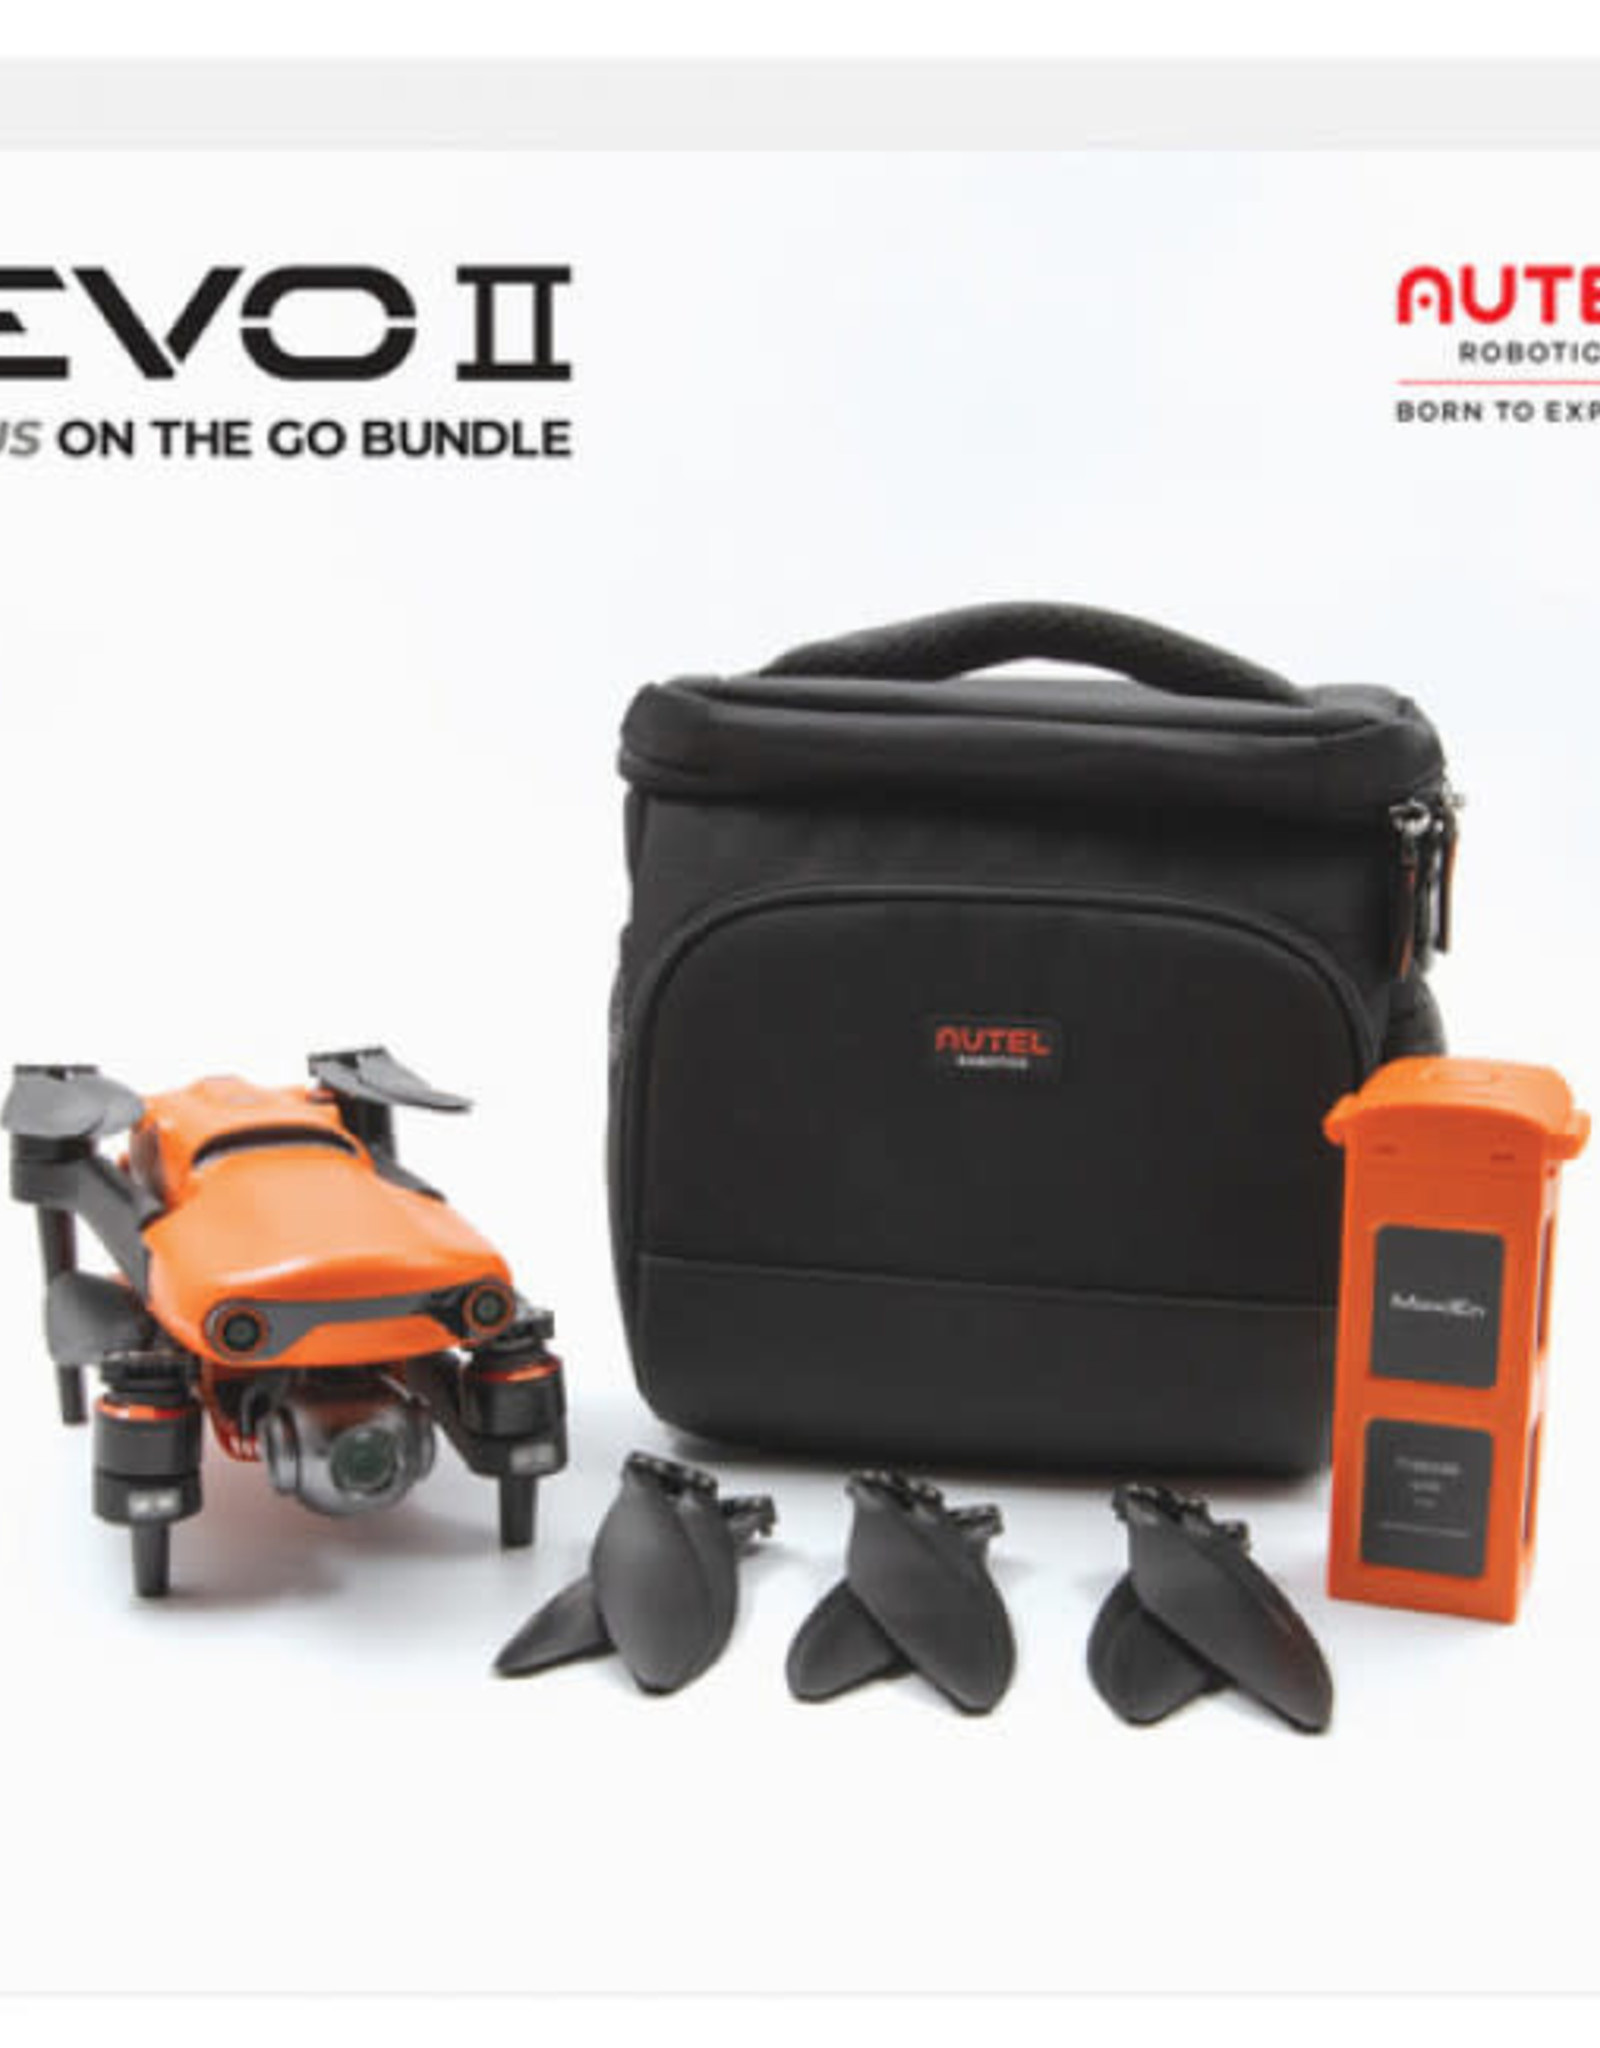 Autel Robotics EVO II Plus On The Go Bundle